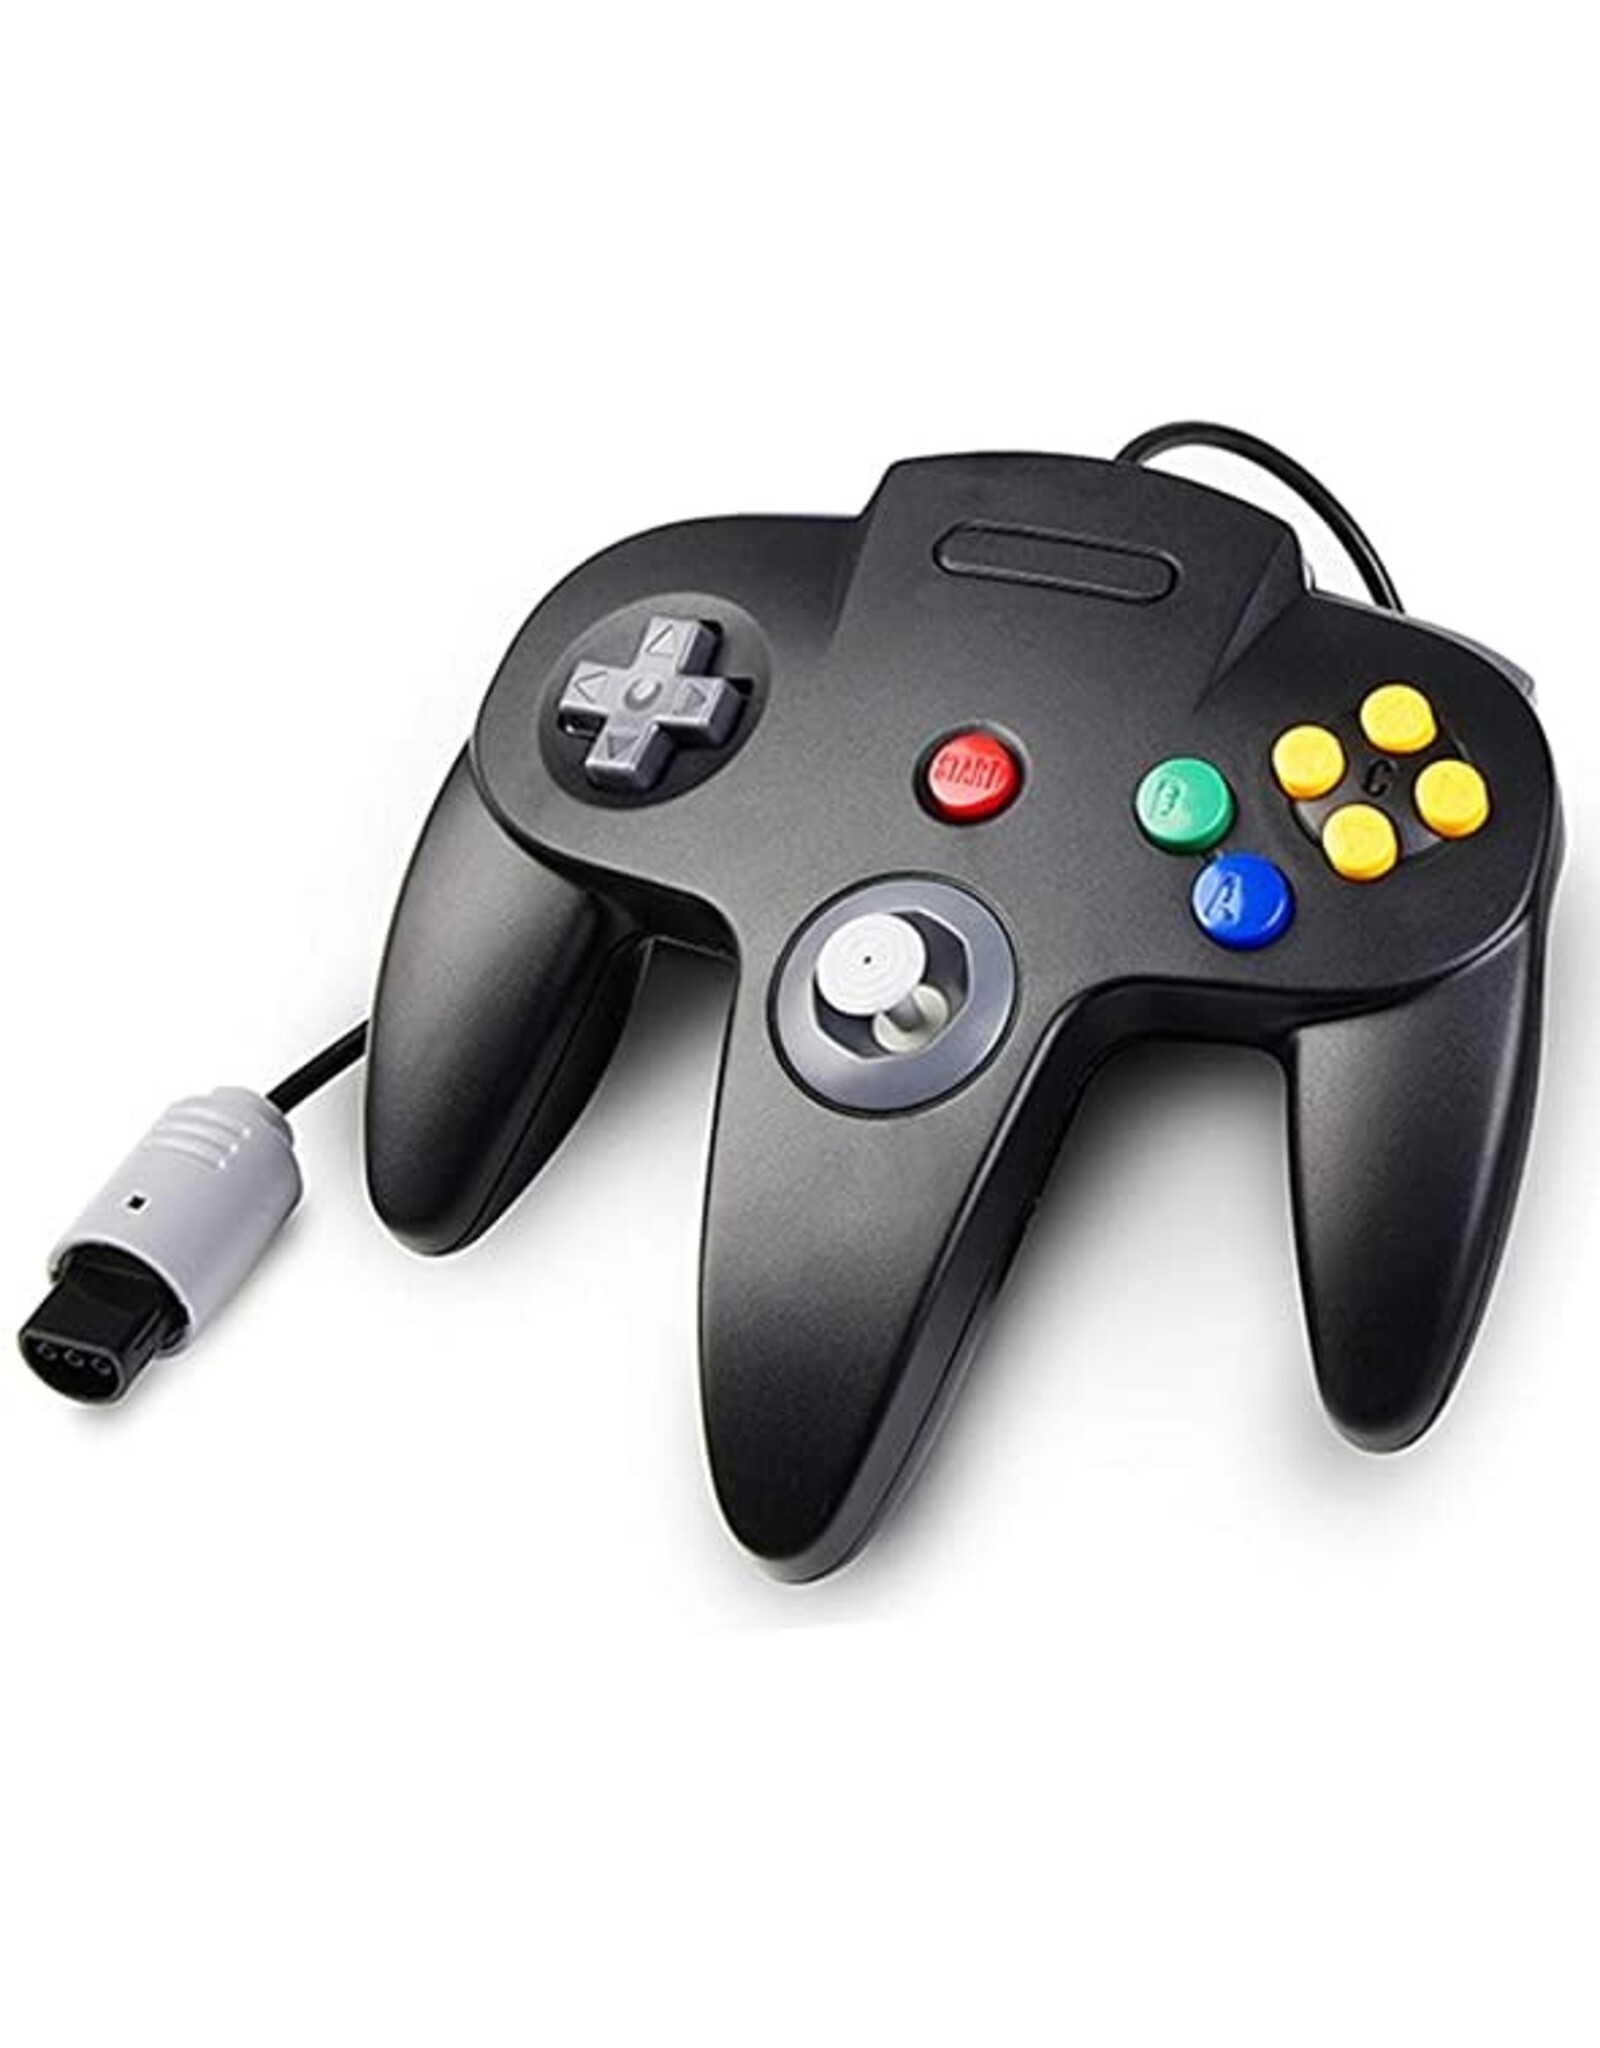 Nintendo 64 N64 Nintendo 64 Controller - Black, Tomee (Brand New)